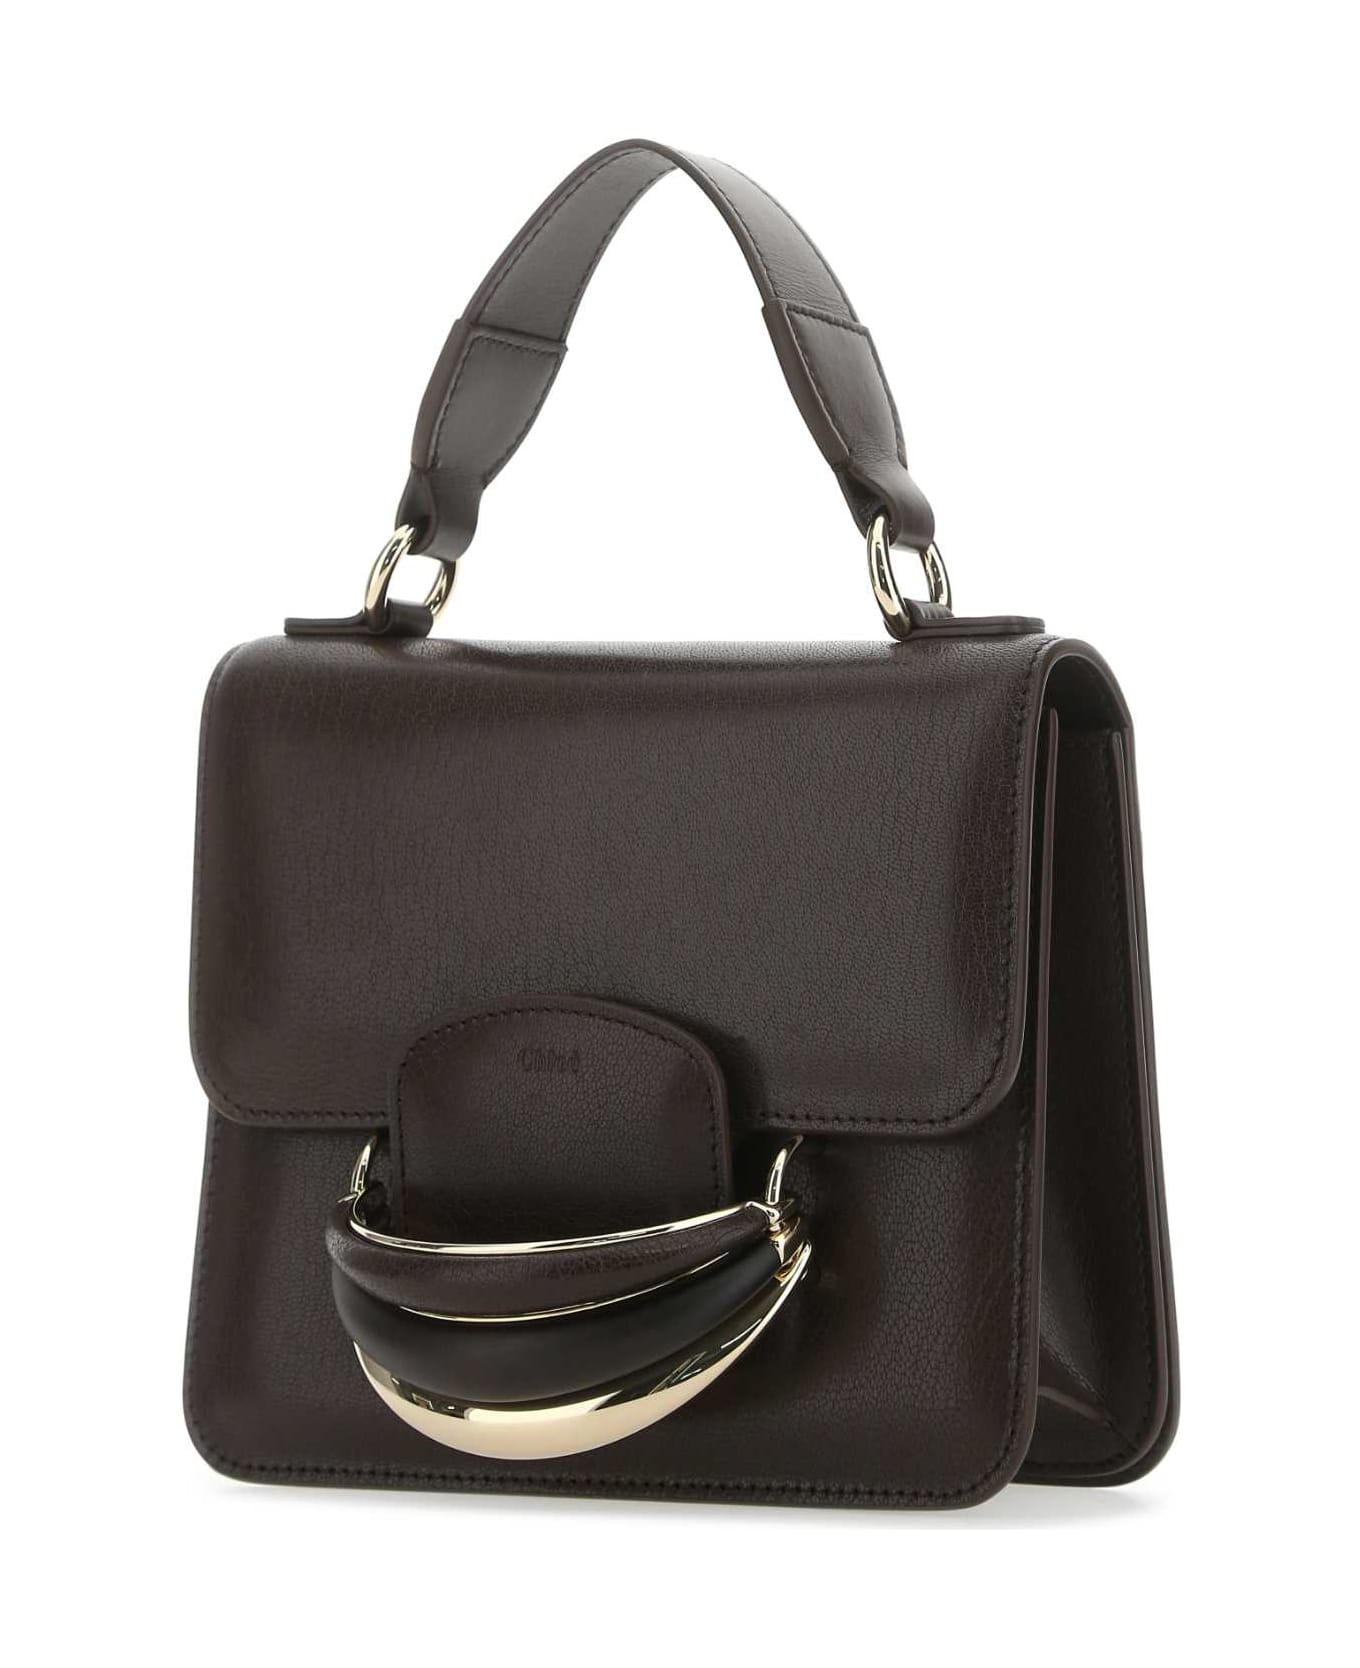 Chloé Dark Brown Leather Small Kattie Handbag - 297